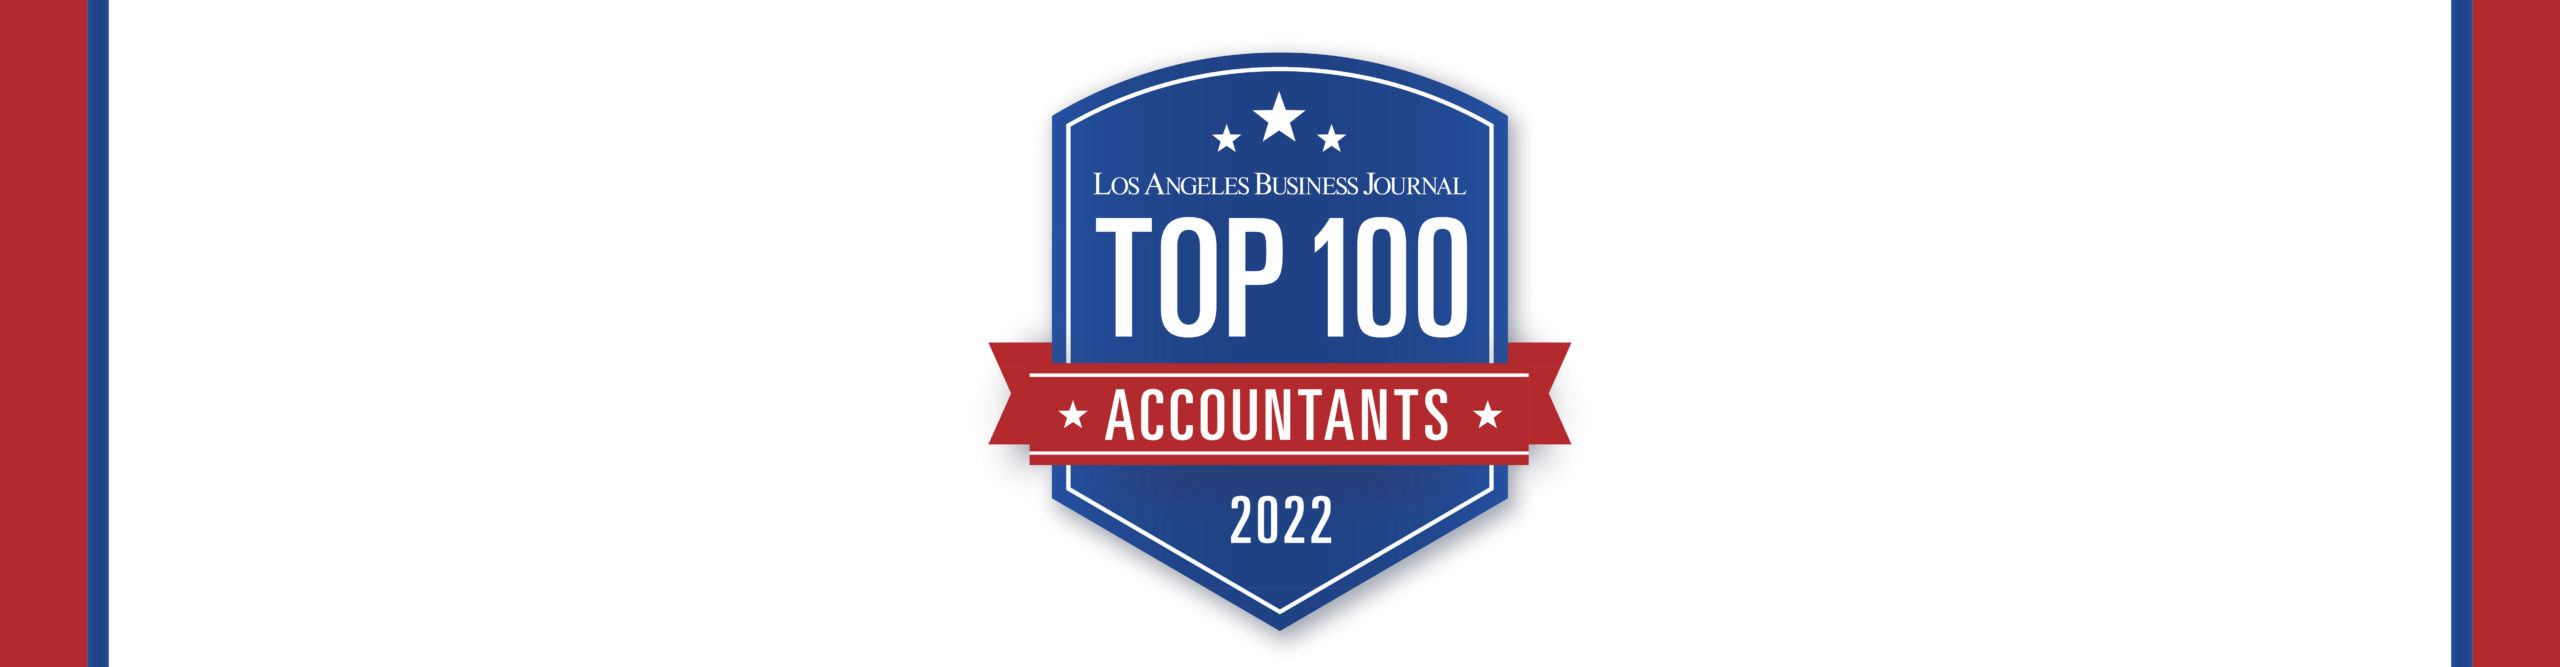 Top 100 Accountants Event Banner